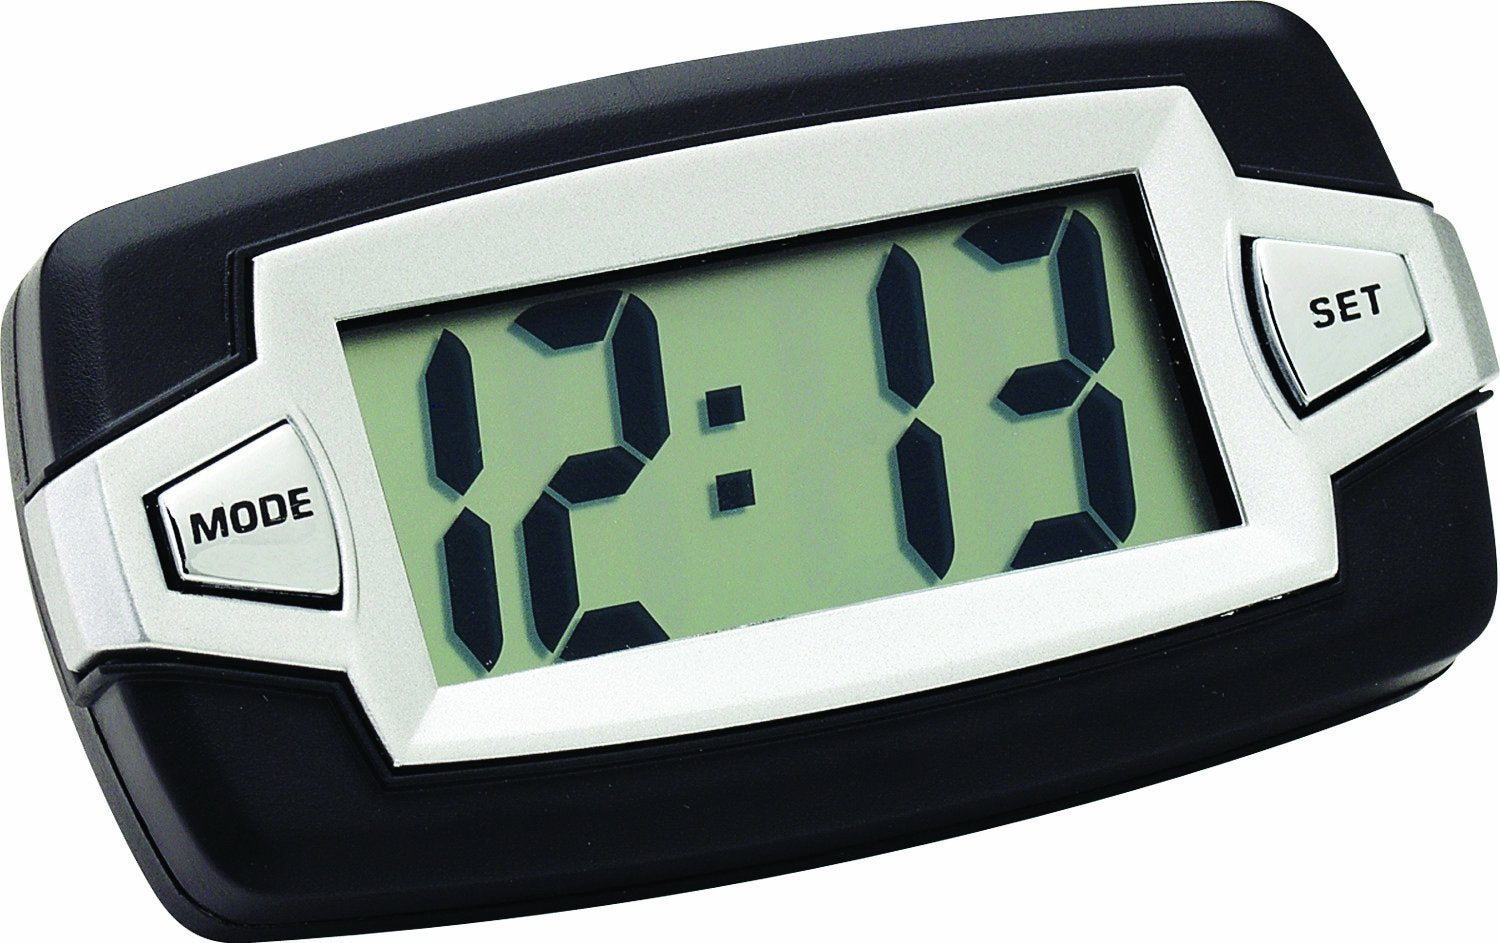 Bell Automotive 22-1-37007-8 Jumbo LCD Clock (2)  - Like New